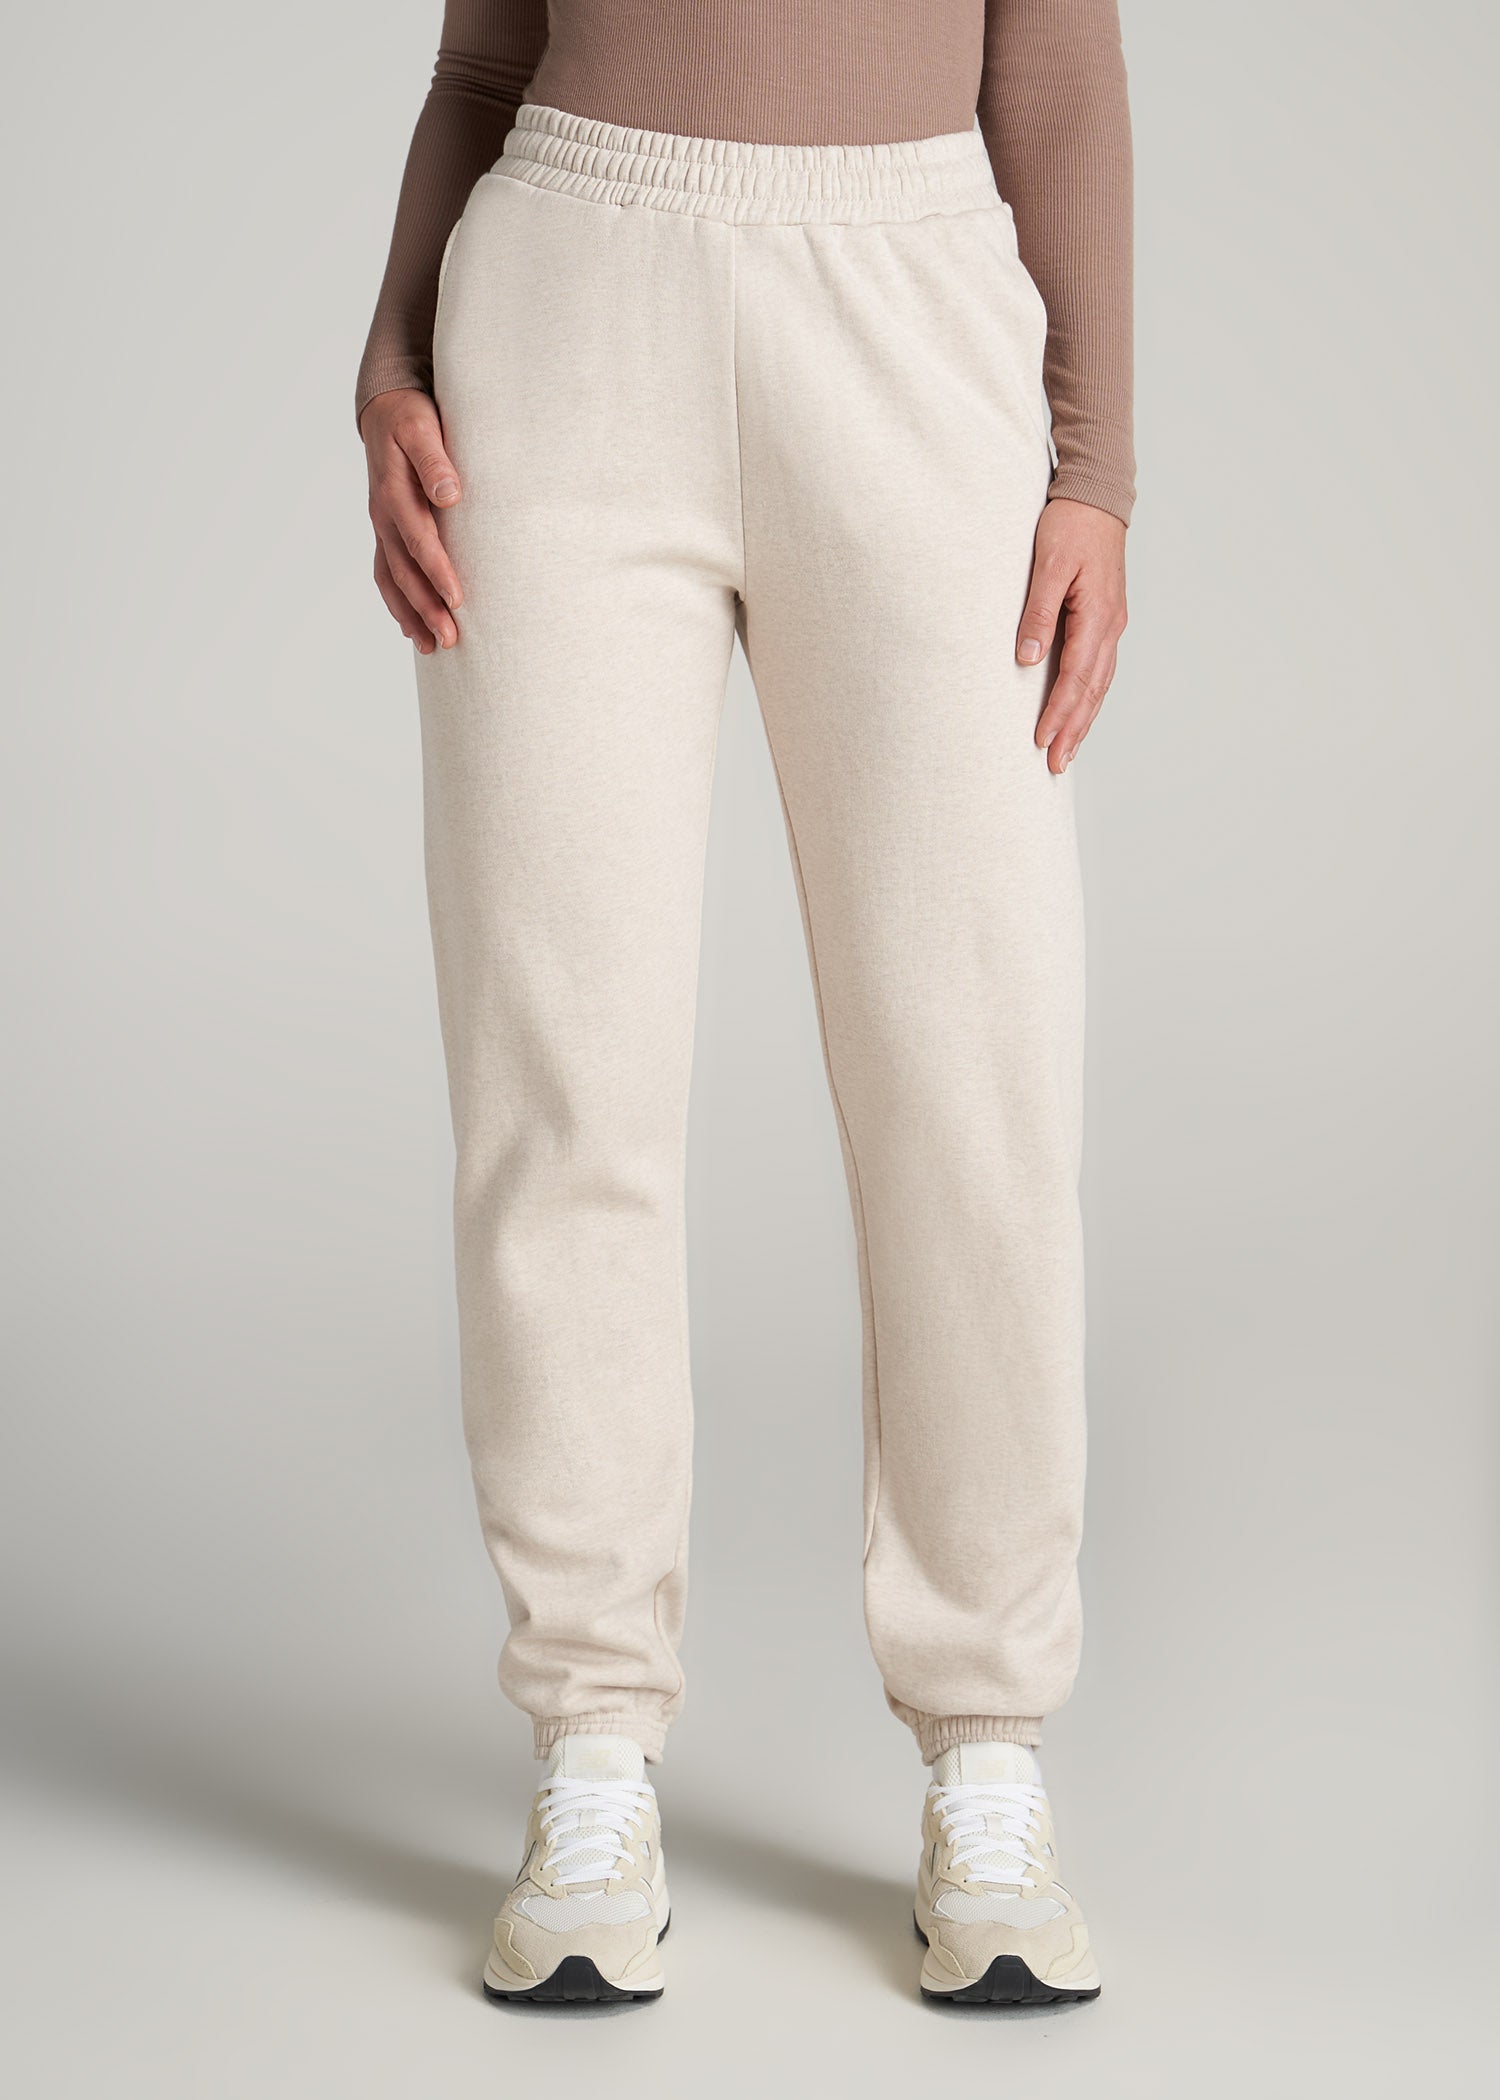       American-Tall-Women-WKND-Fleece-Relaxed-Sweatpants-Oatmeal-Mix-front